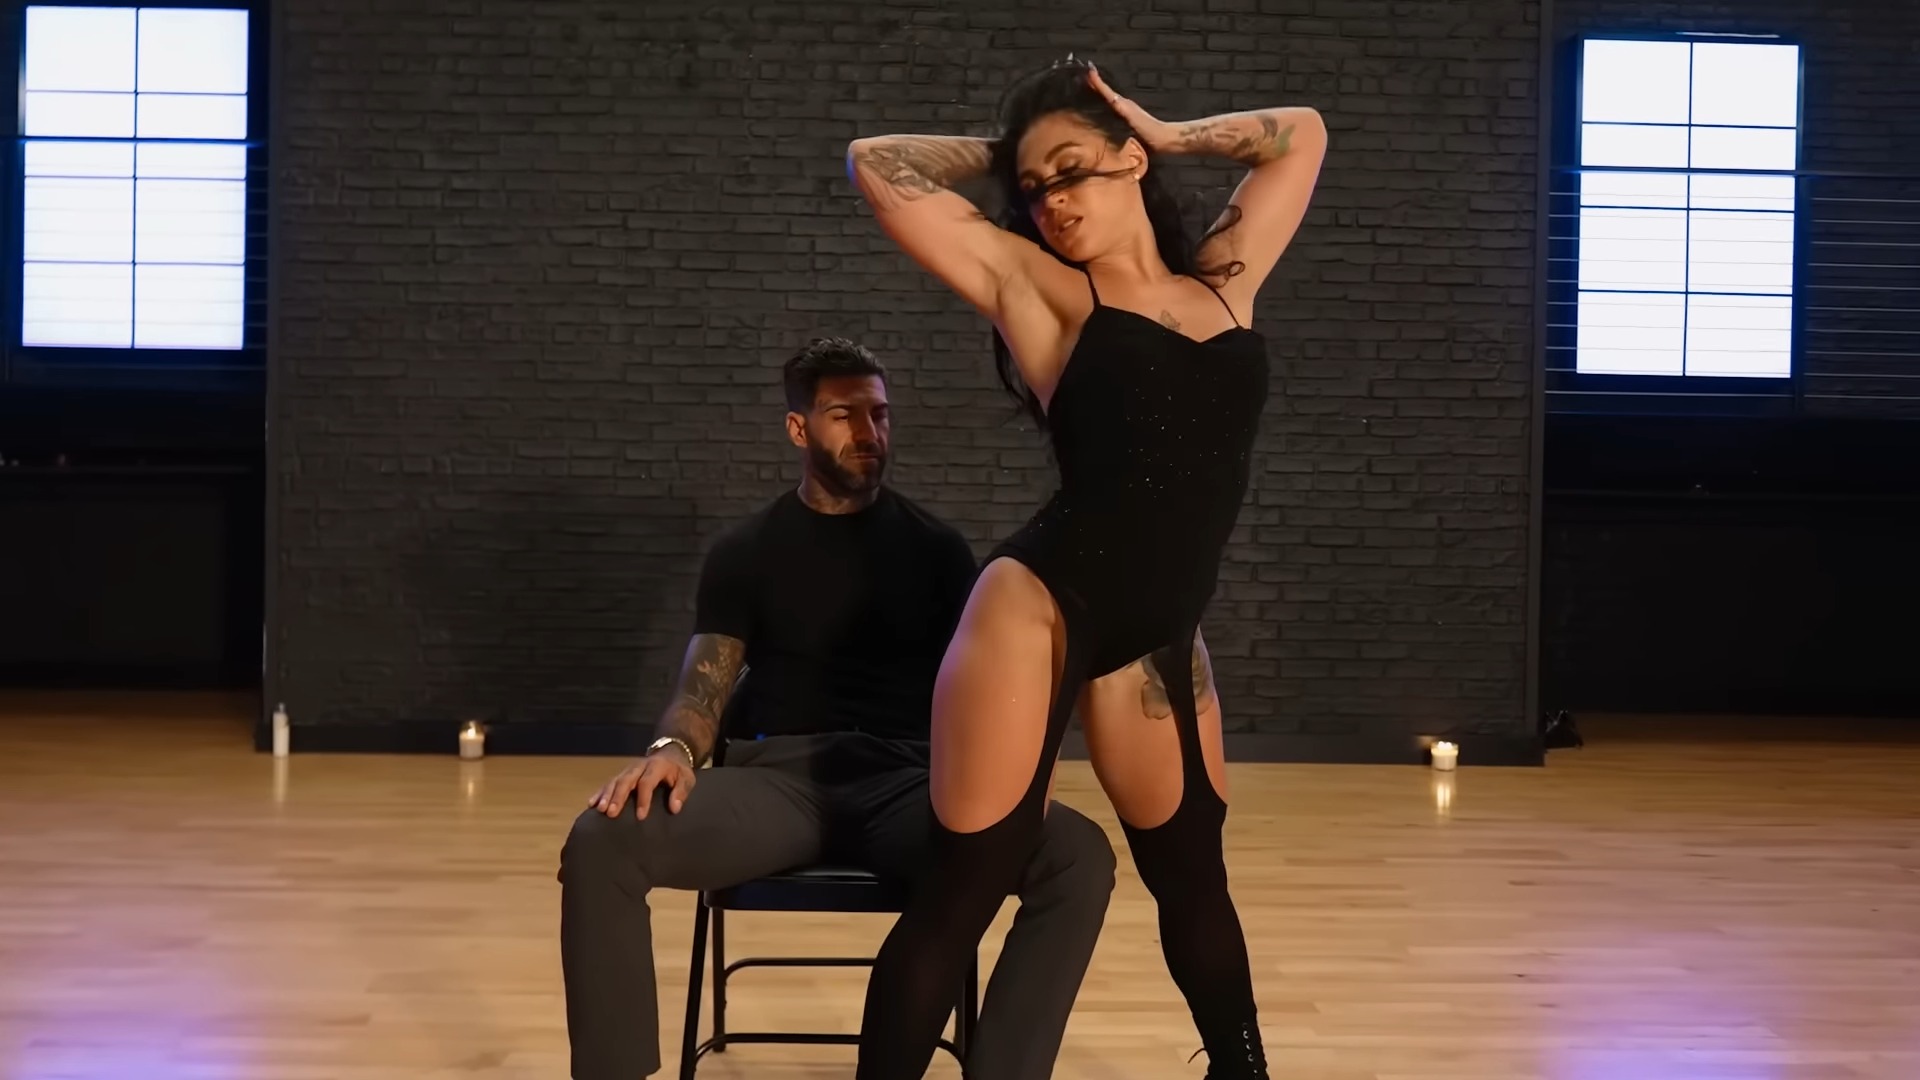 boon long share sexiest lap dance video photos